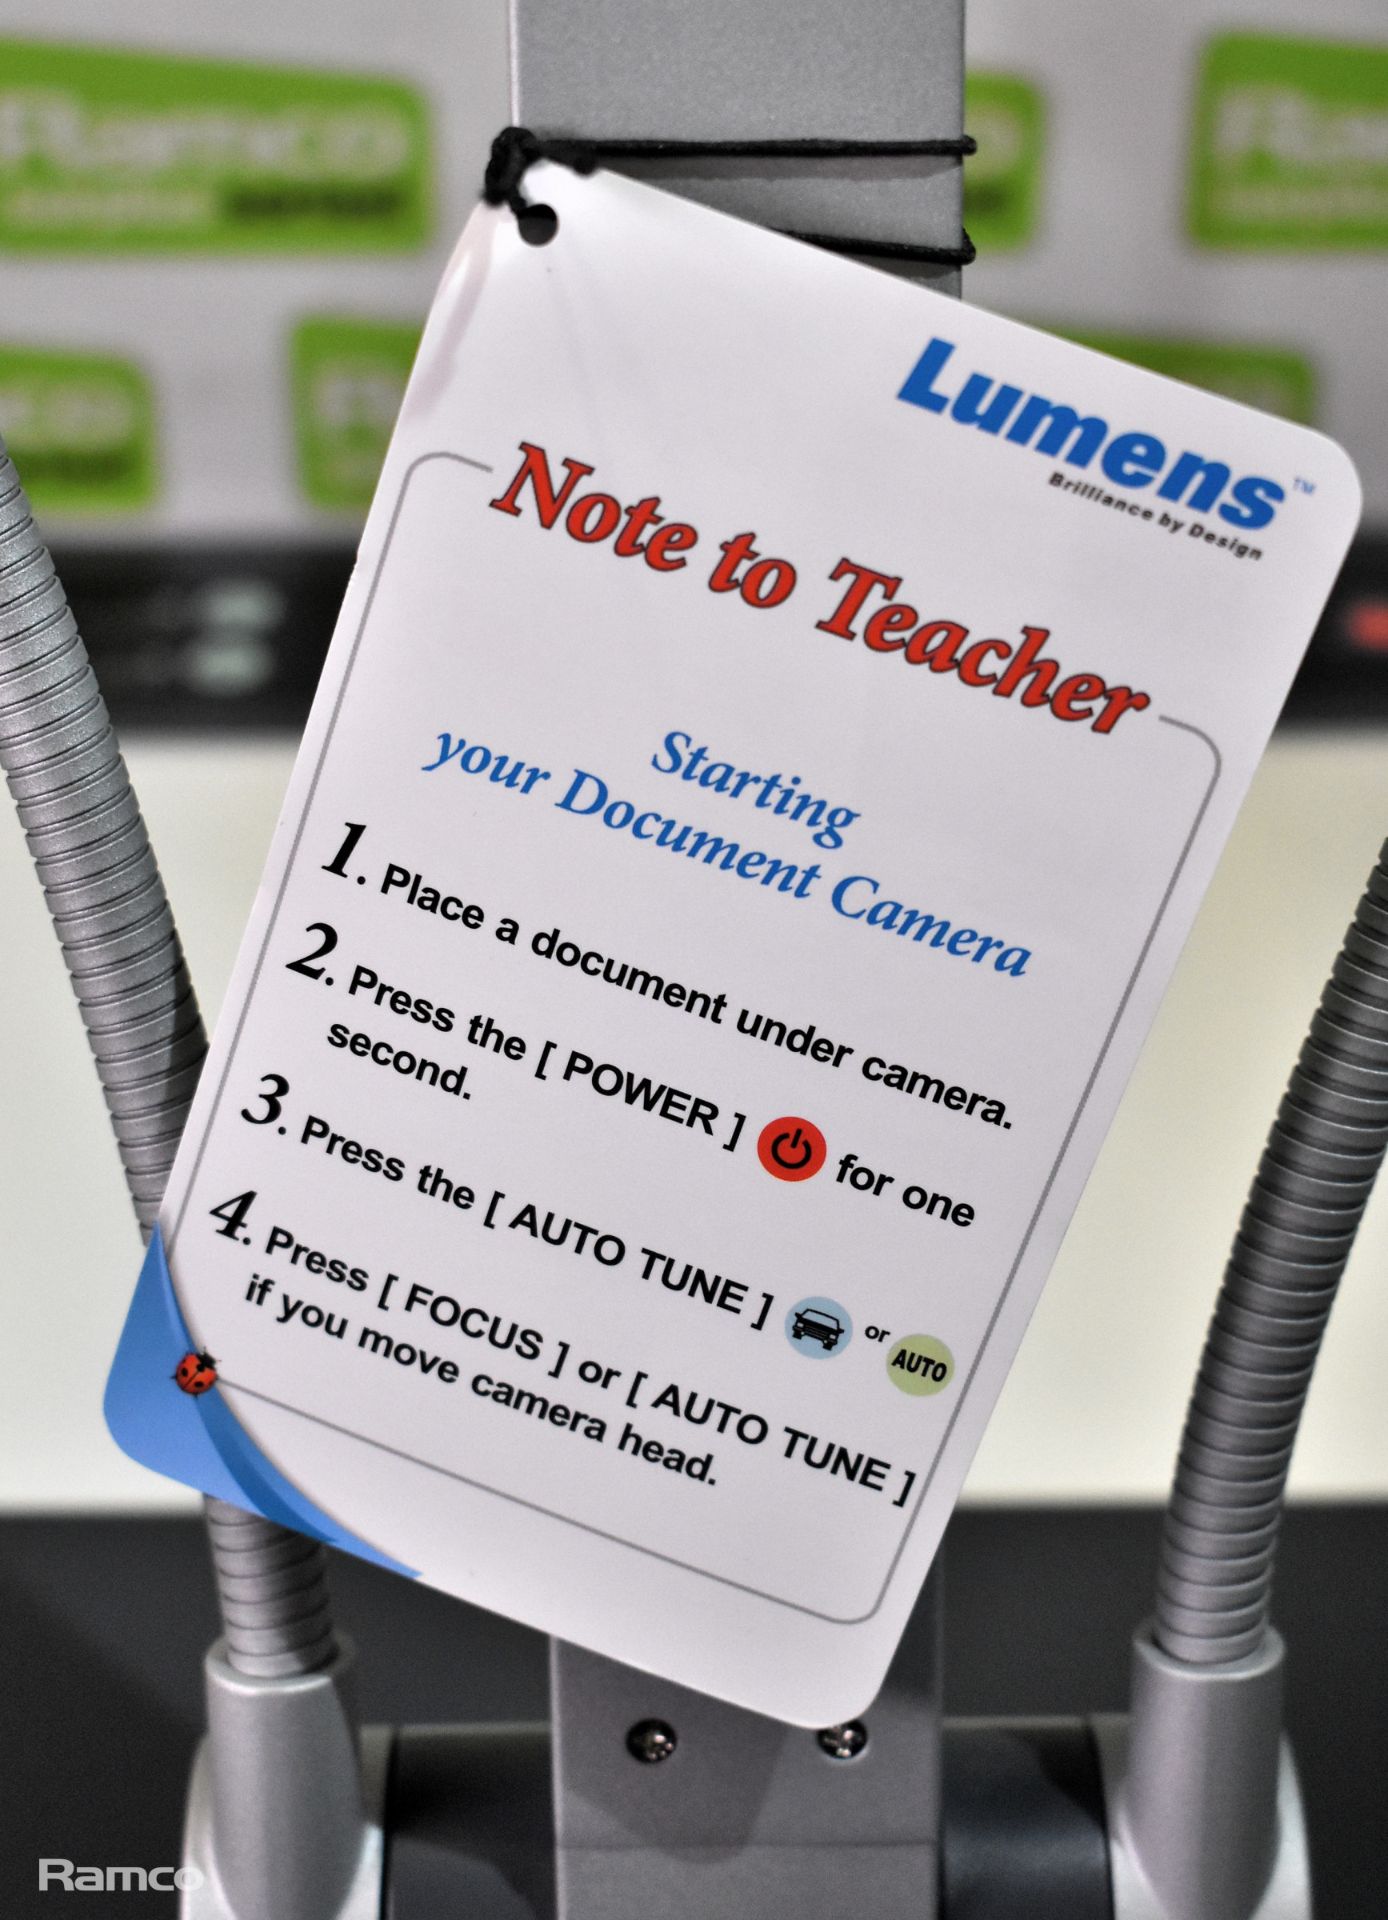 Lumens PS752 desktop document camera - Image 6 of 10